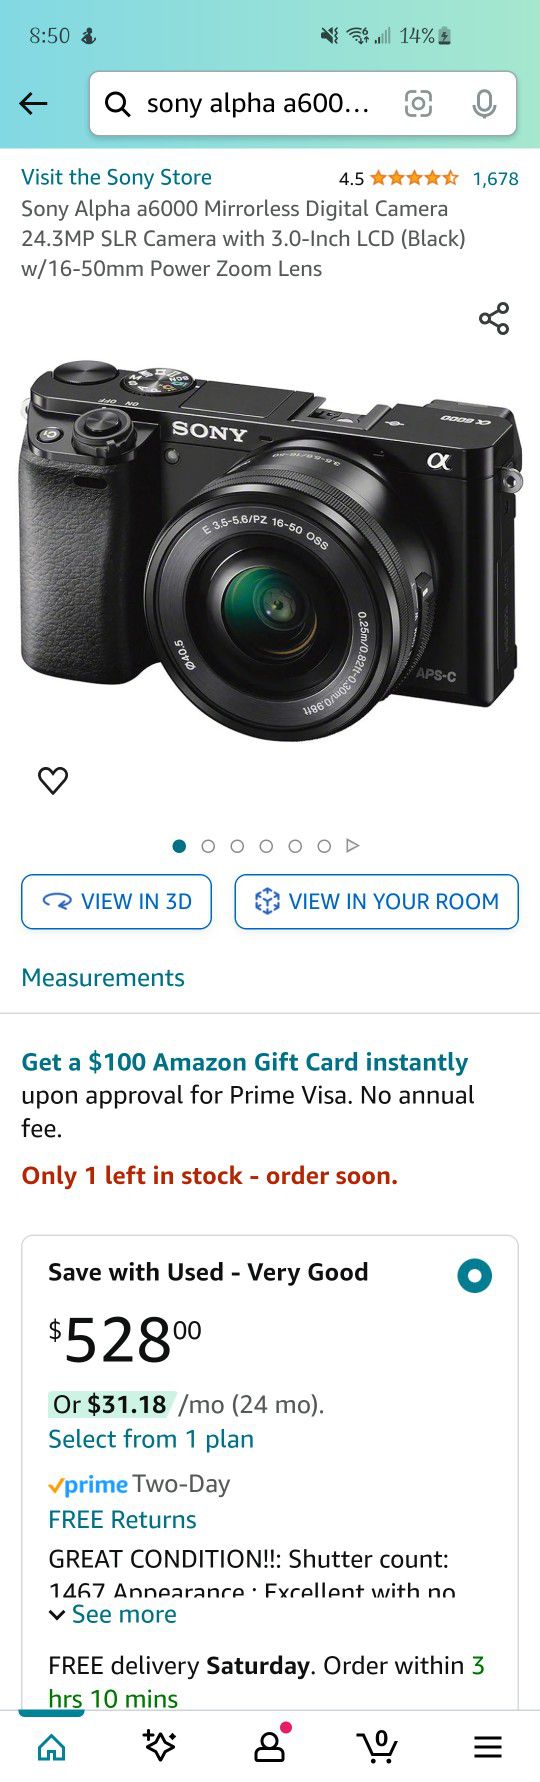 Sony a6000 Mirrorless Digital Camera $450 OBO